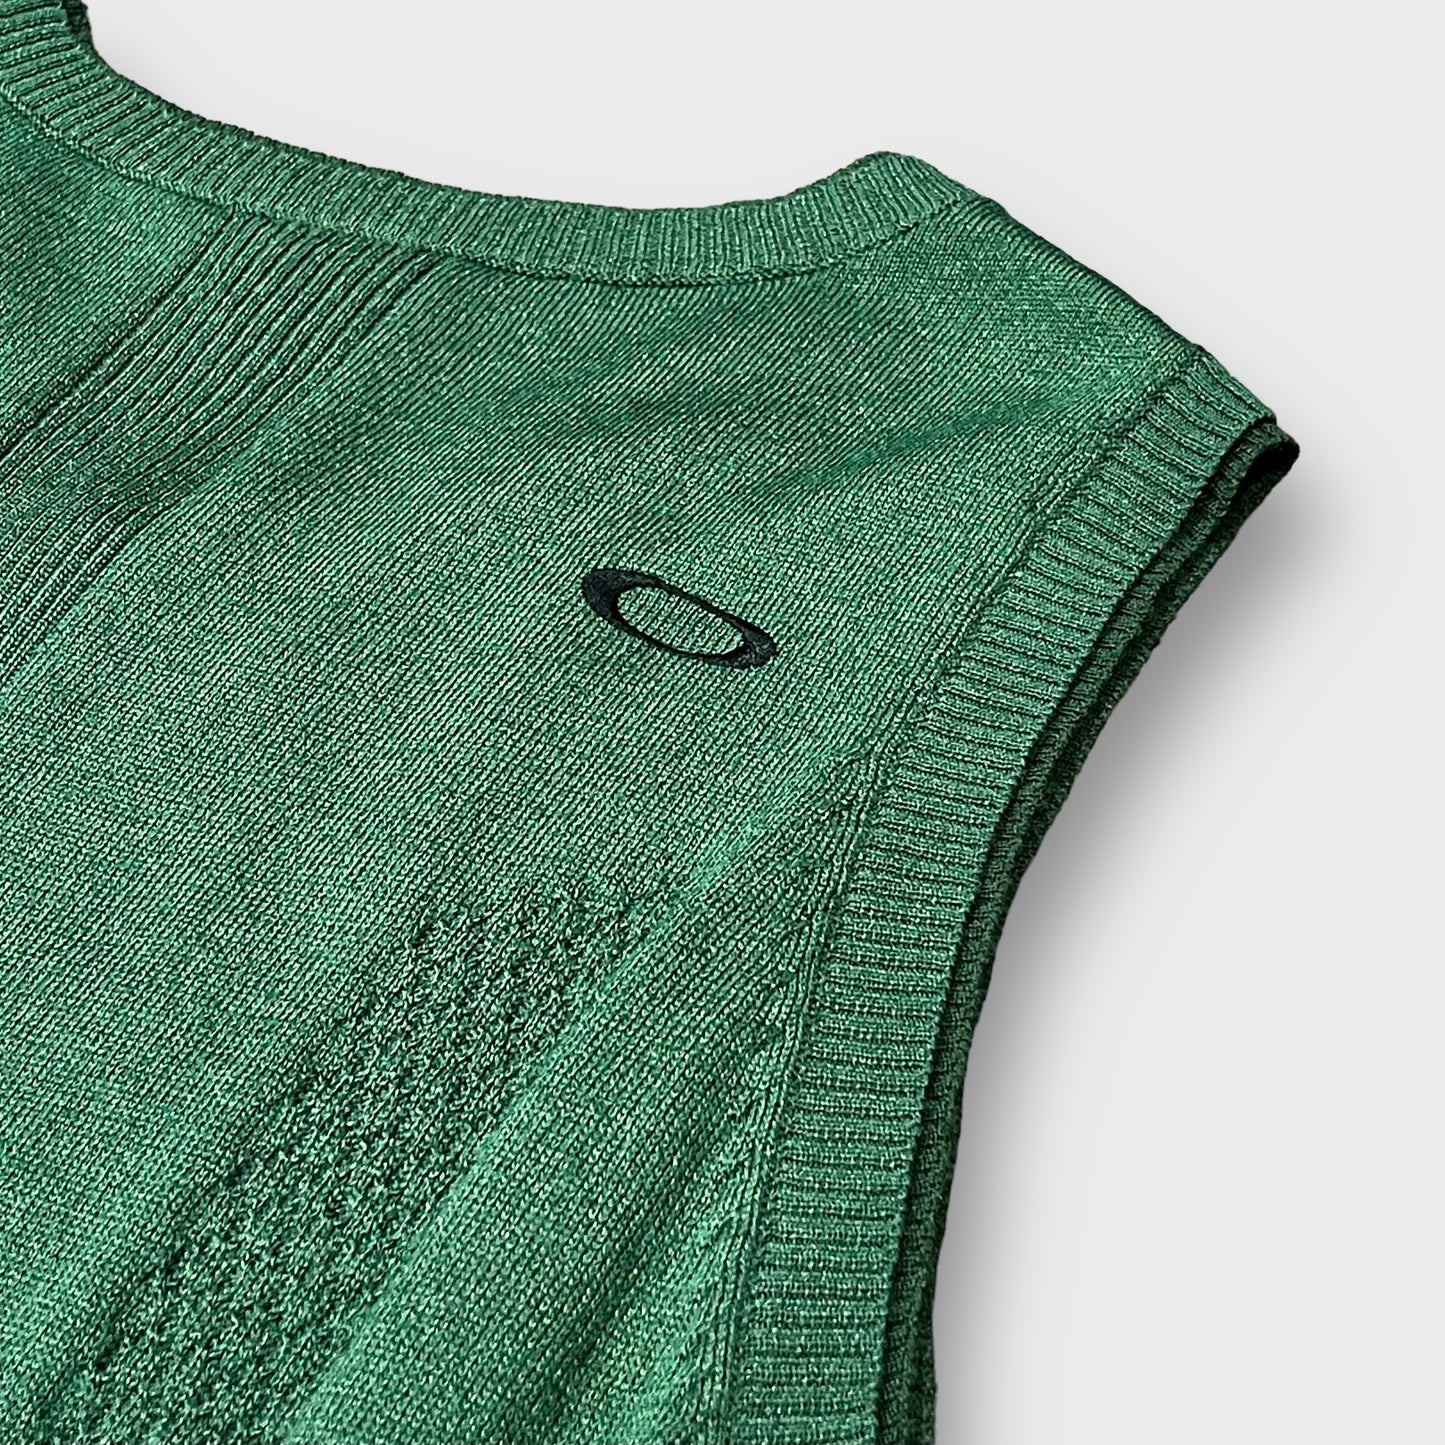 00’s “OAKLEY” knit vest